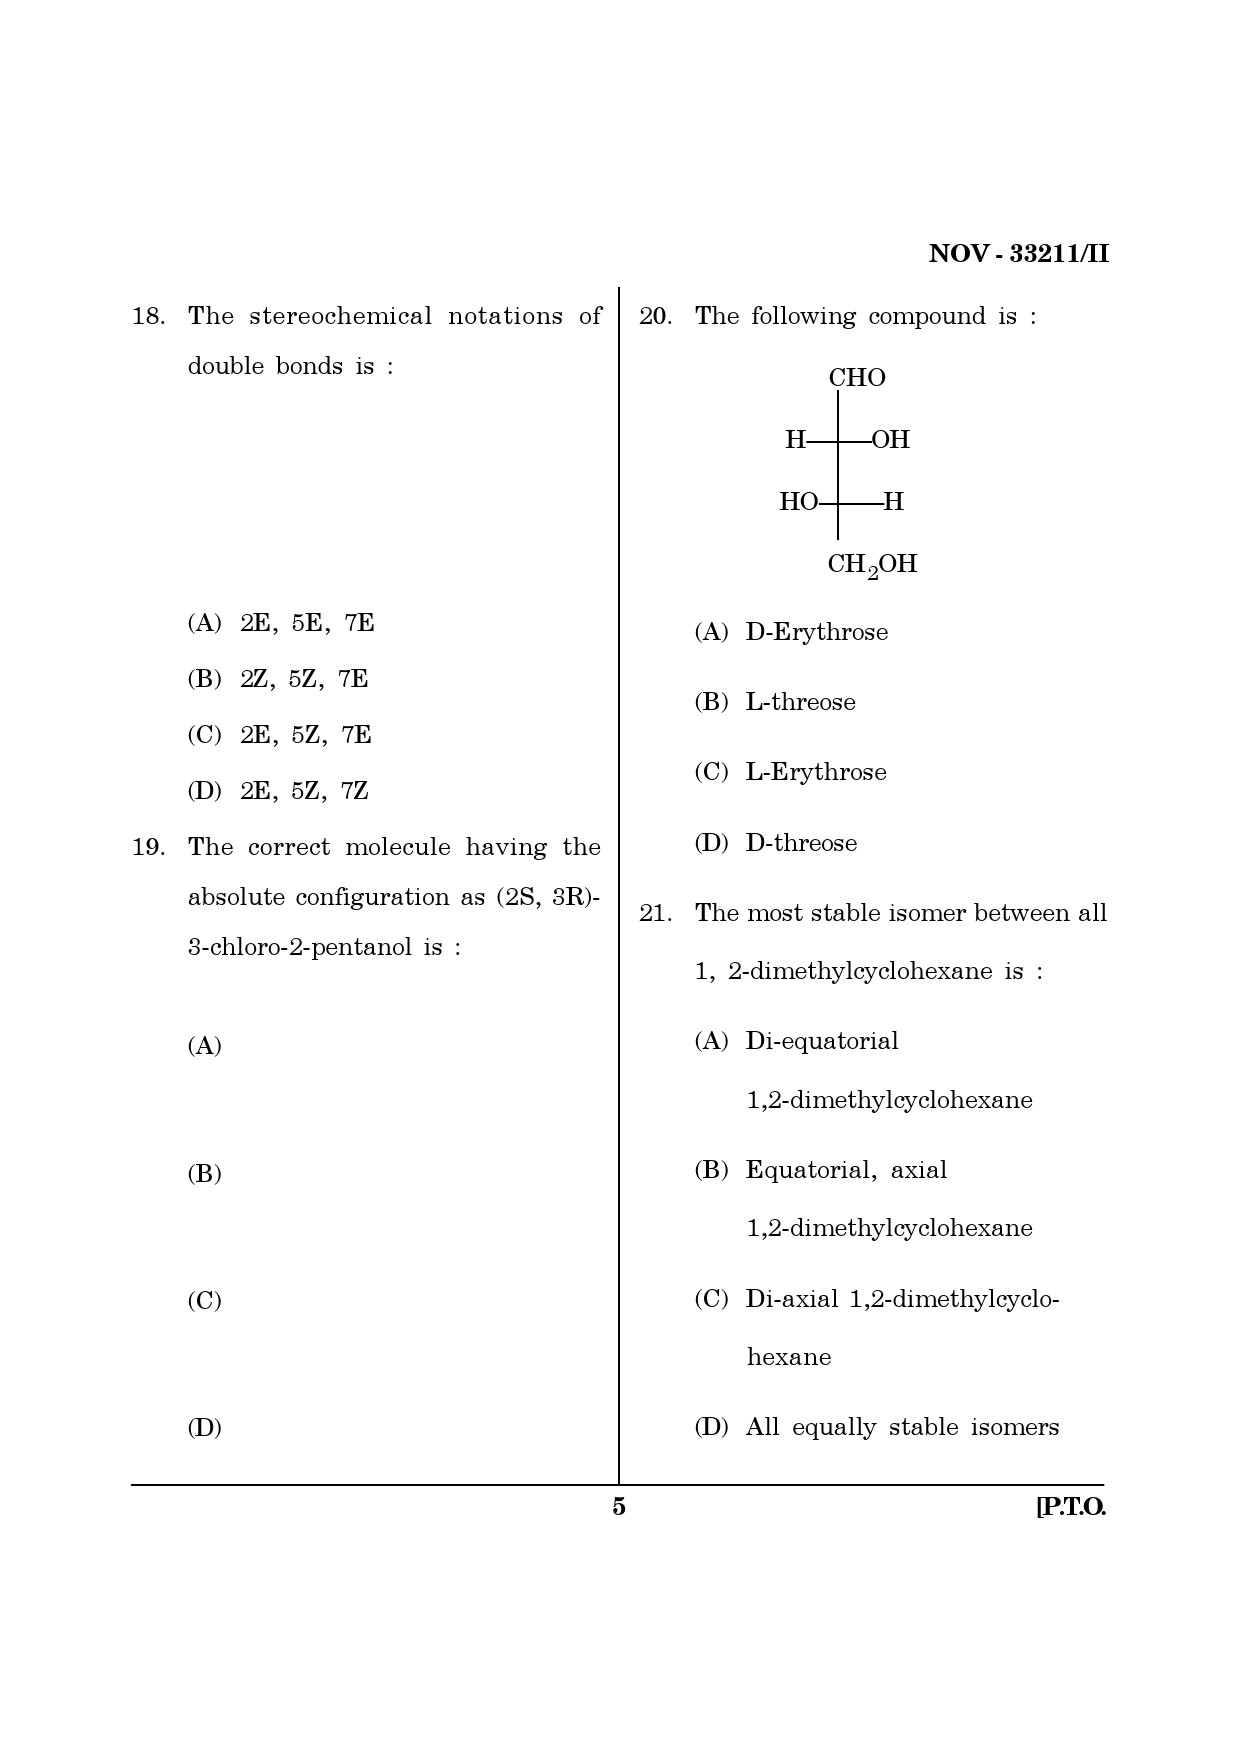 Maharashtra SET Chemical Sciences Question Paper II November 2011 5